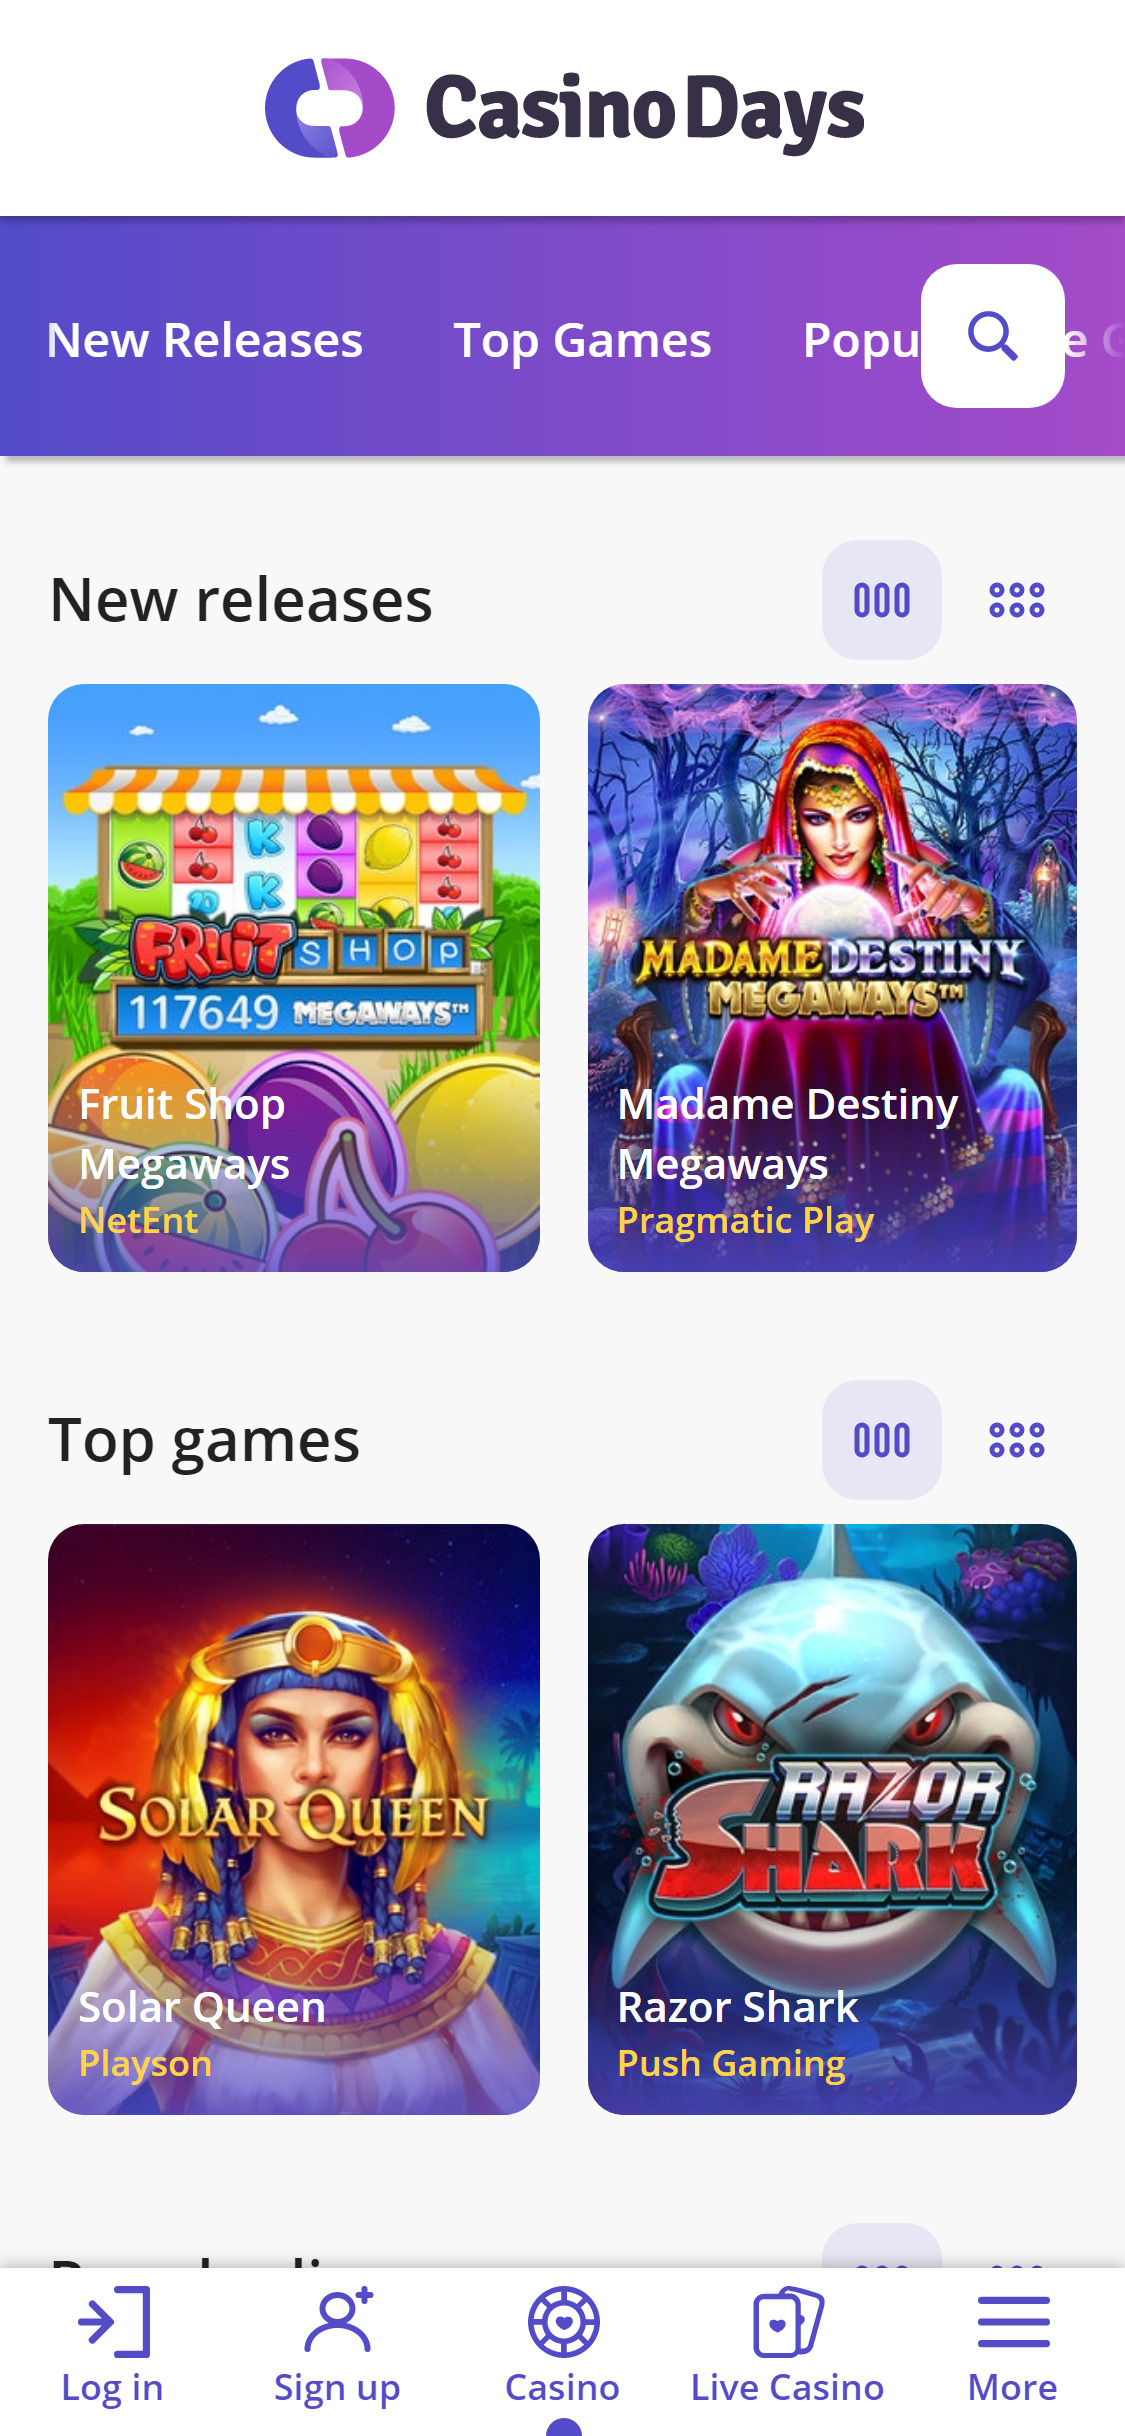 Casino Days Casino Mobile Games Review